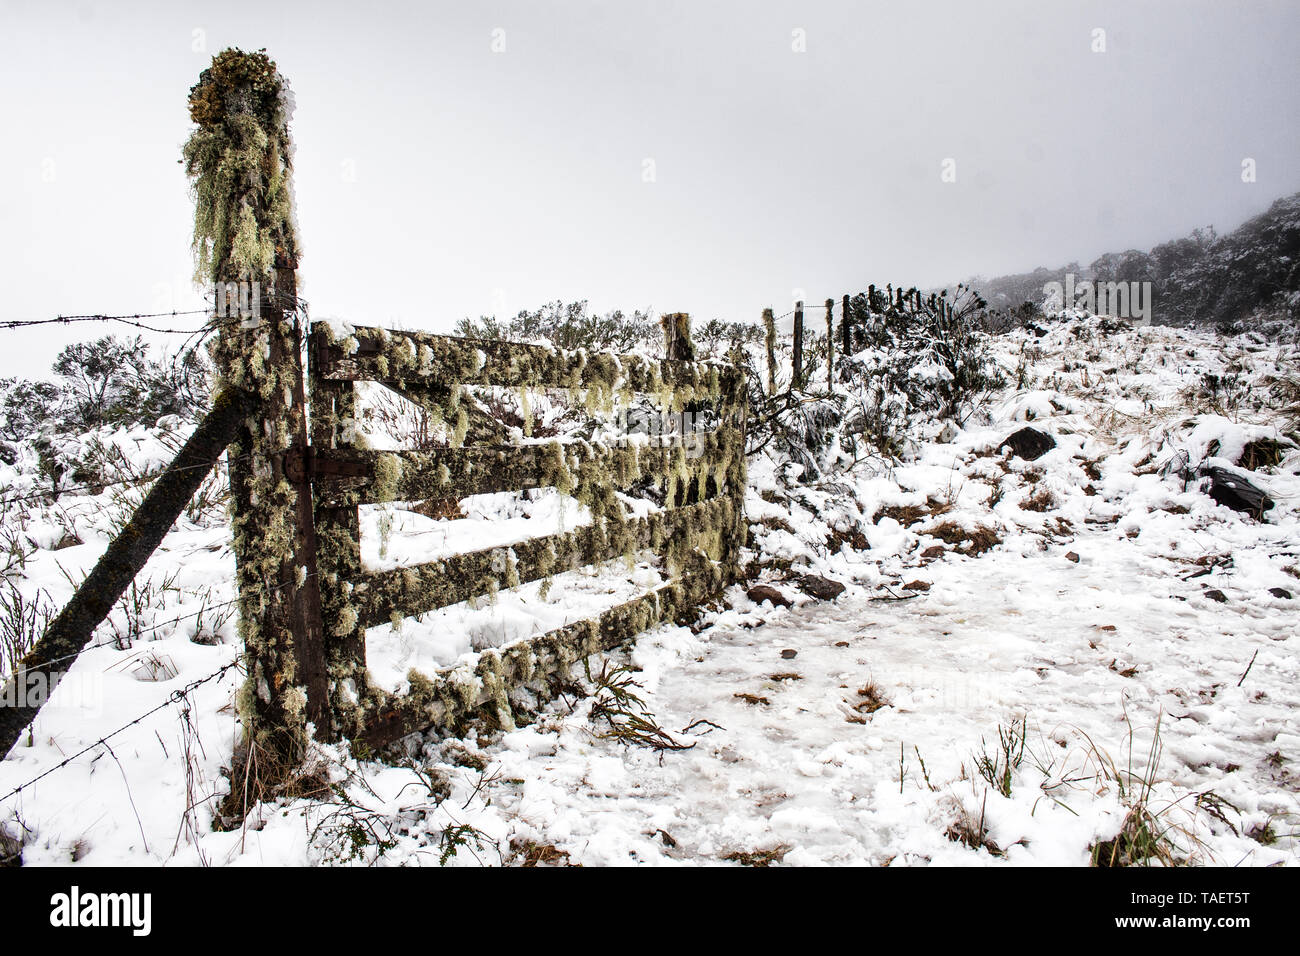 Fence in a snowed landscape.  Urubici, Santa Catarina, Brazil. Stock Photo